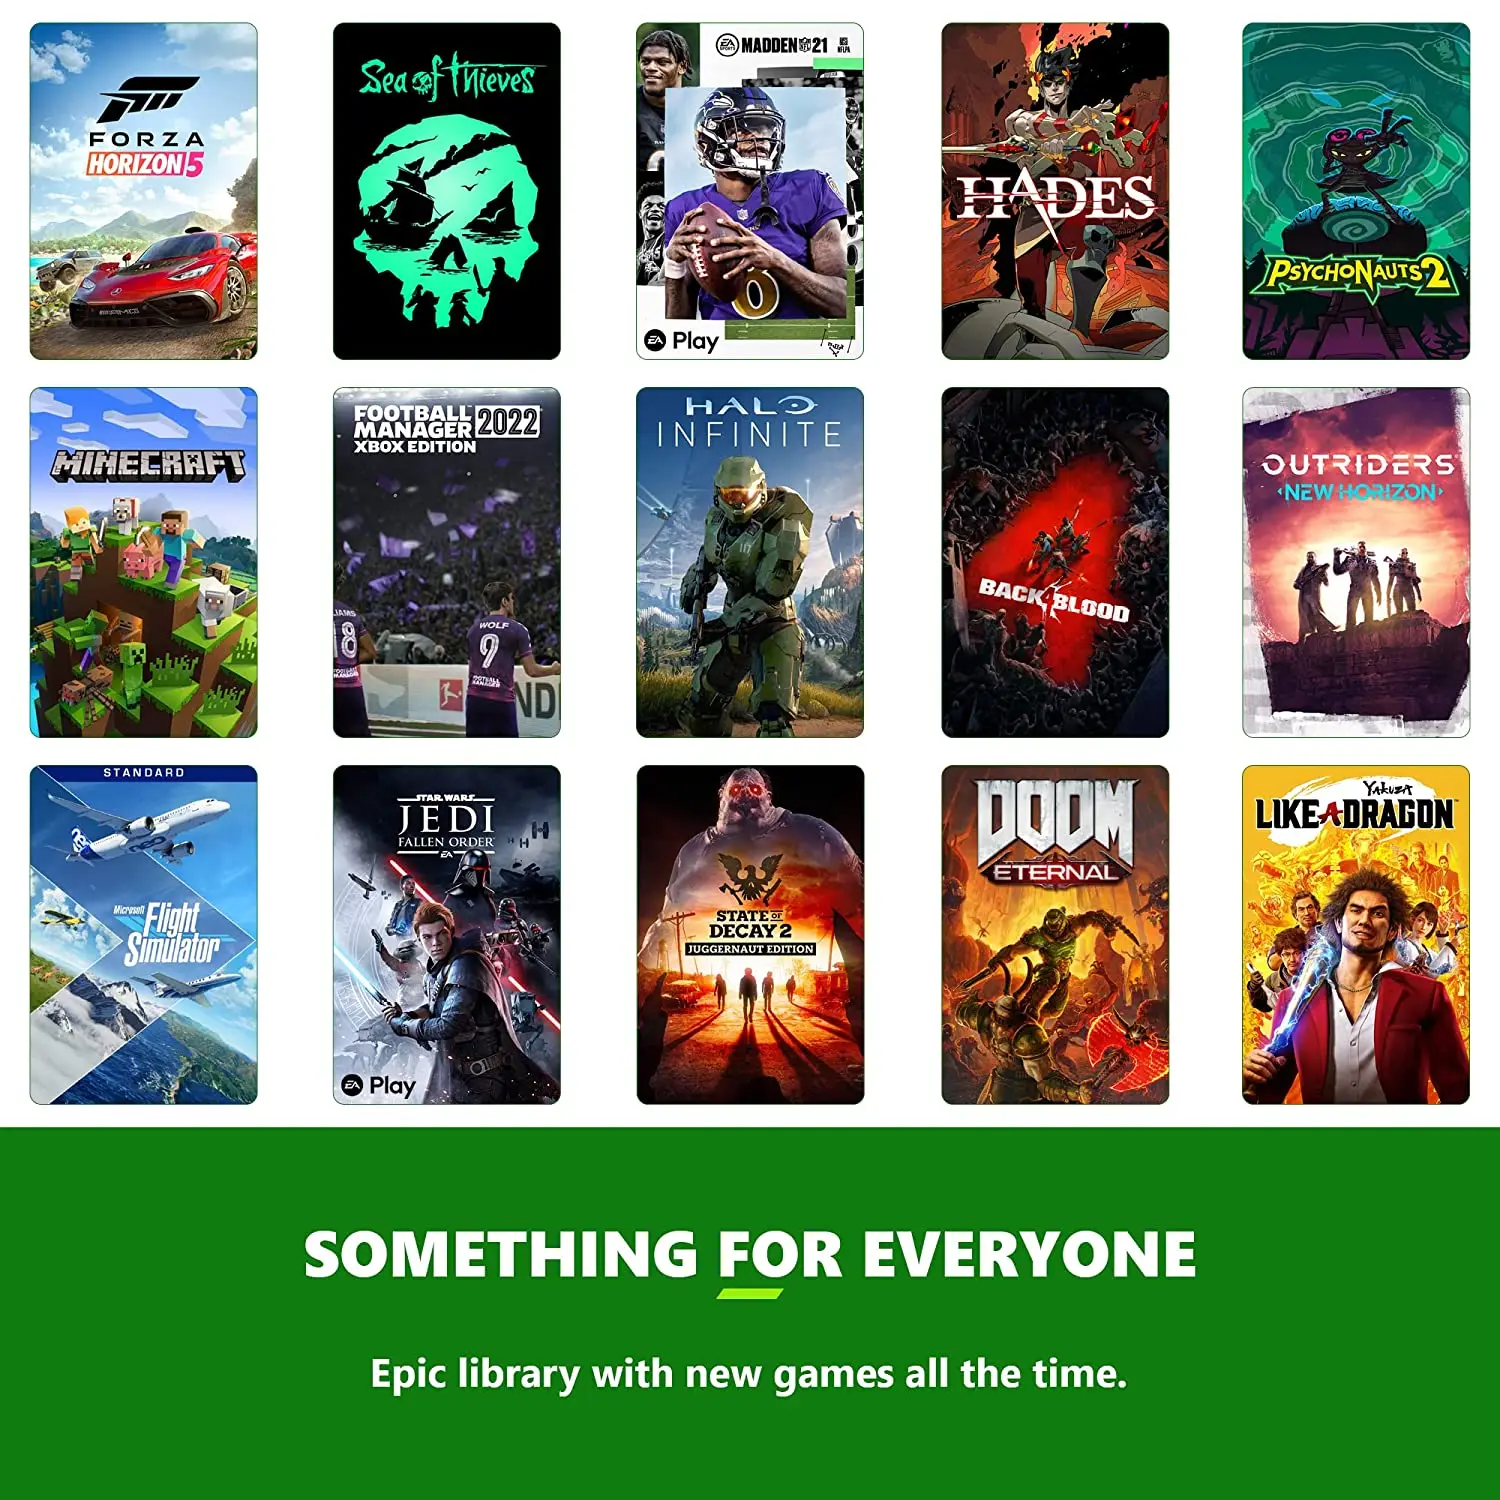 Xbox Ultimate Game Pass Ultimate – 12 Meses Parental ‣ Santos Games